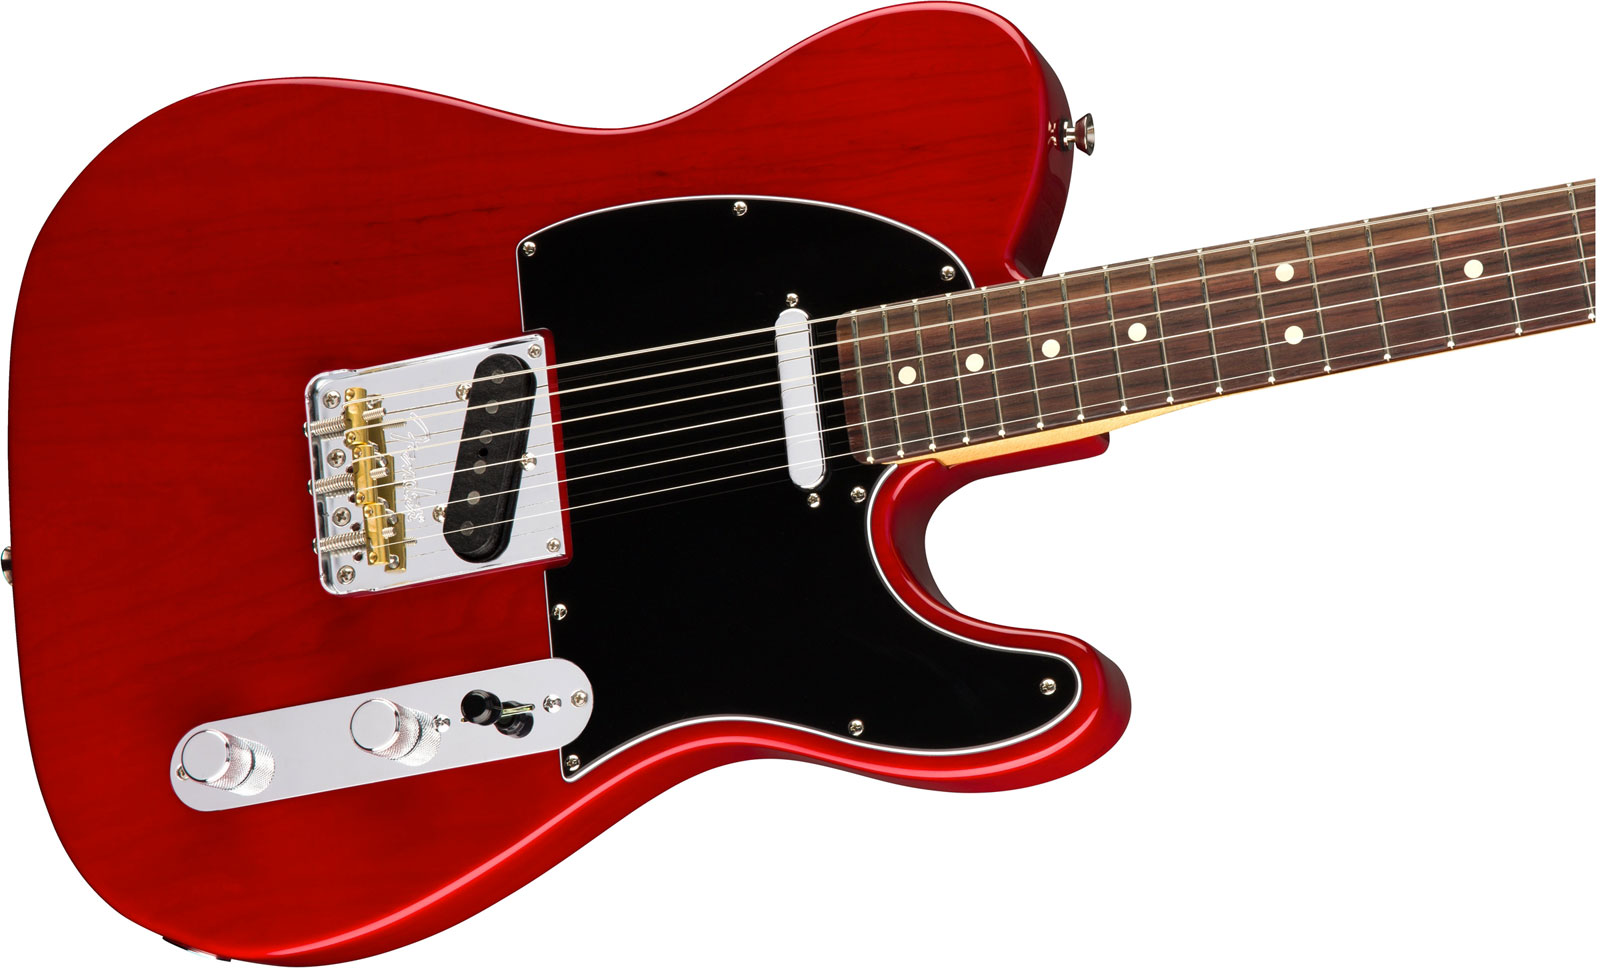 Fender Tele American Professional 2s Usa Rw - Crimson Red Transparent - E-Gitarre in Str-Form - Variation 2